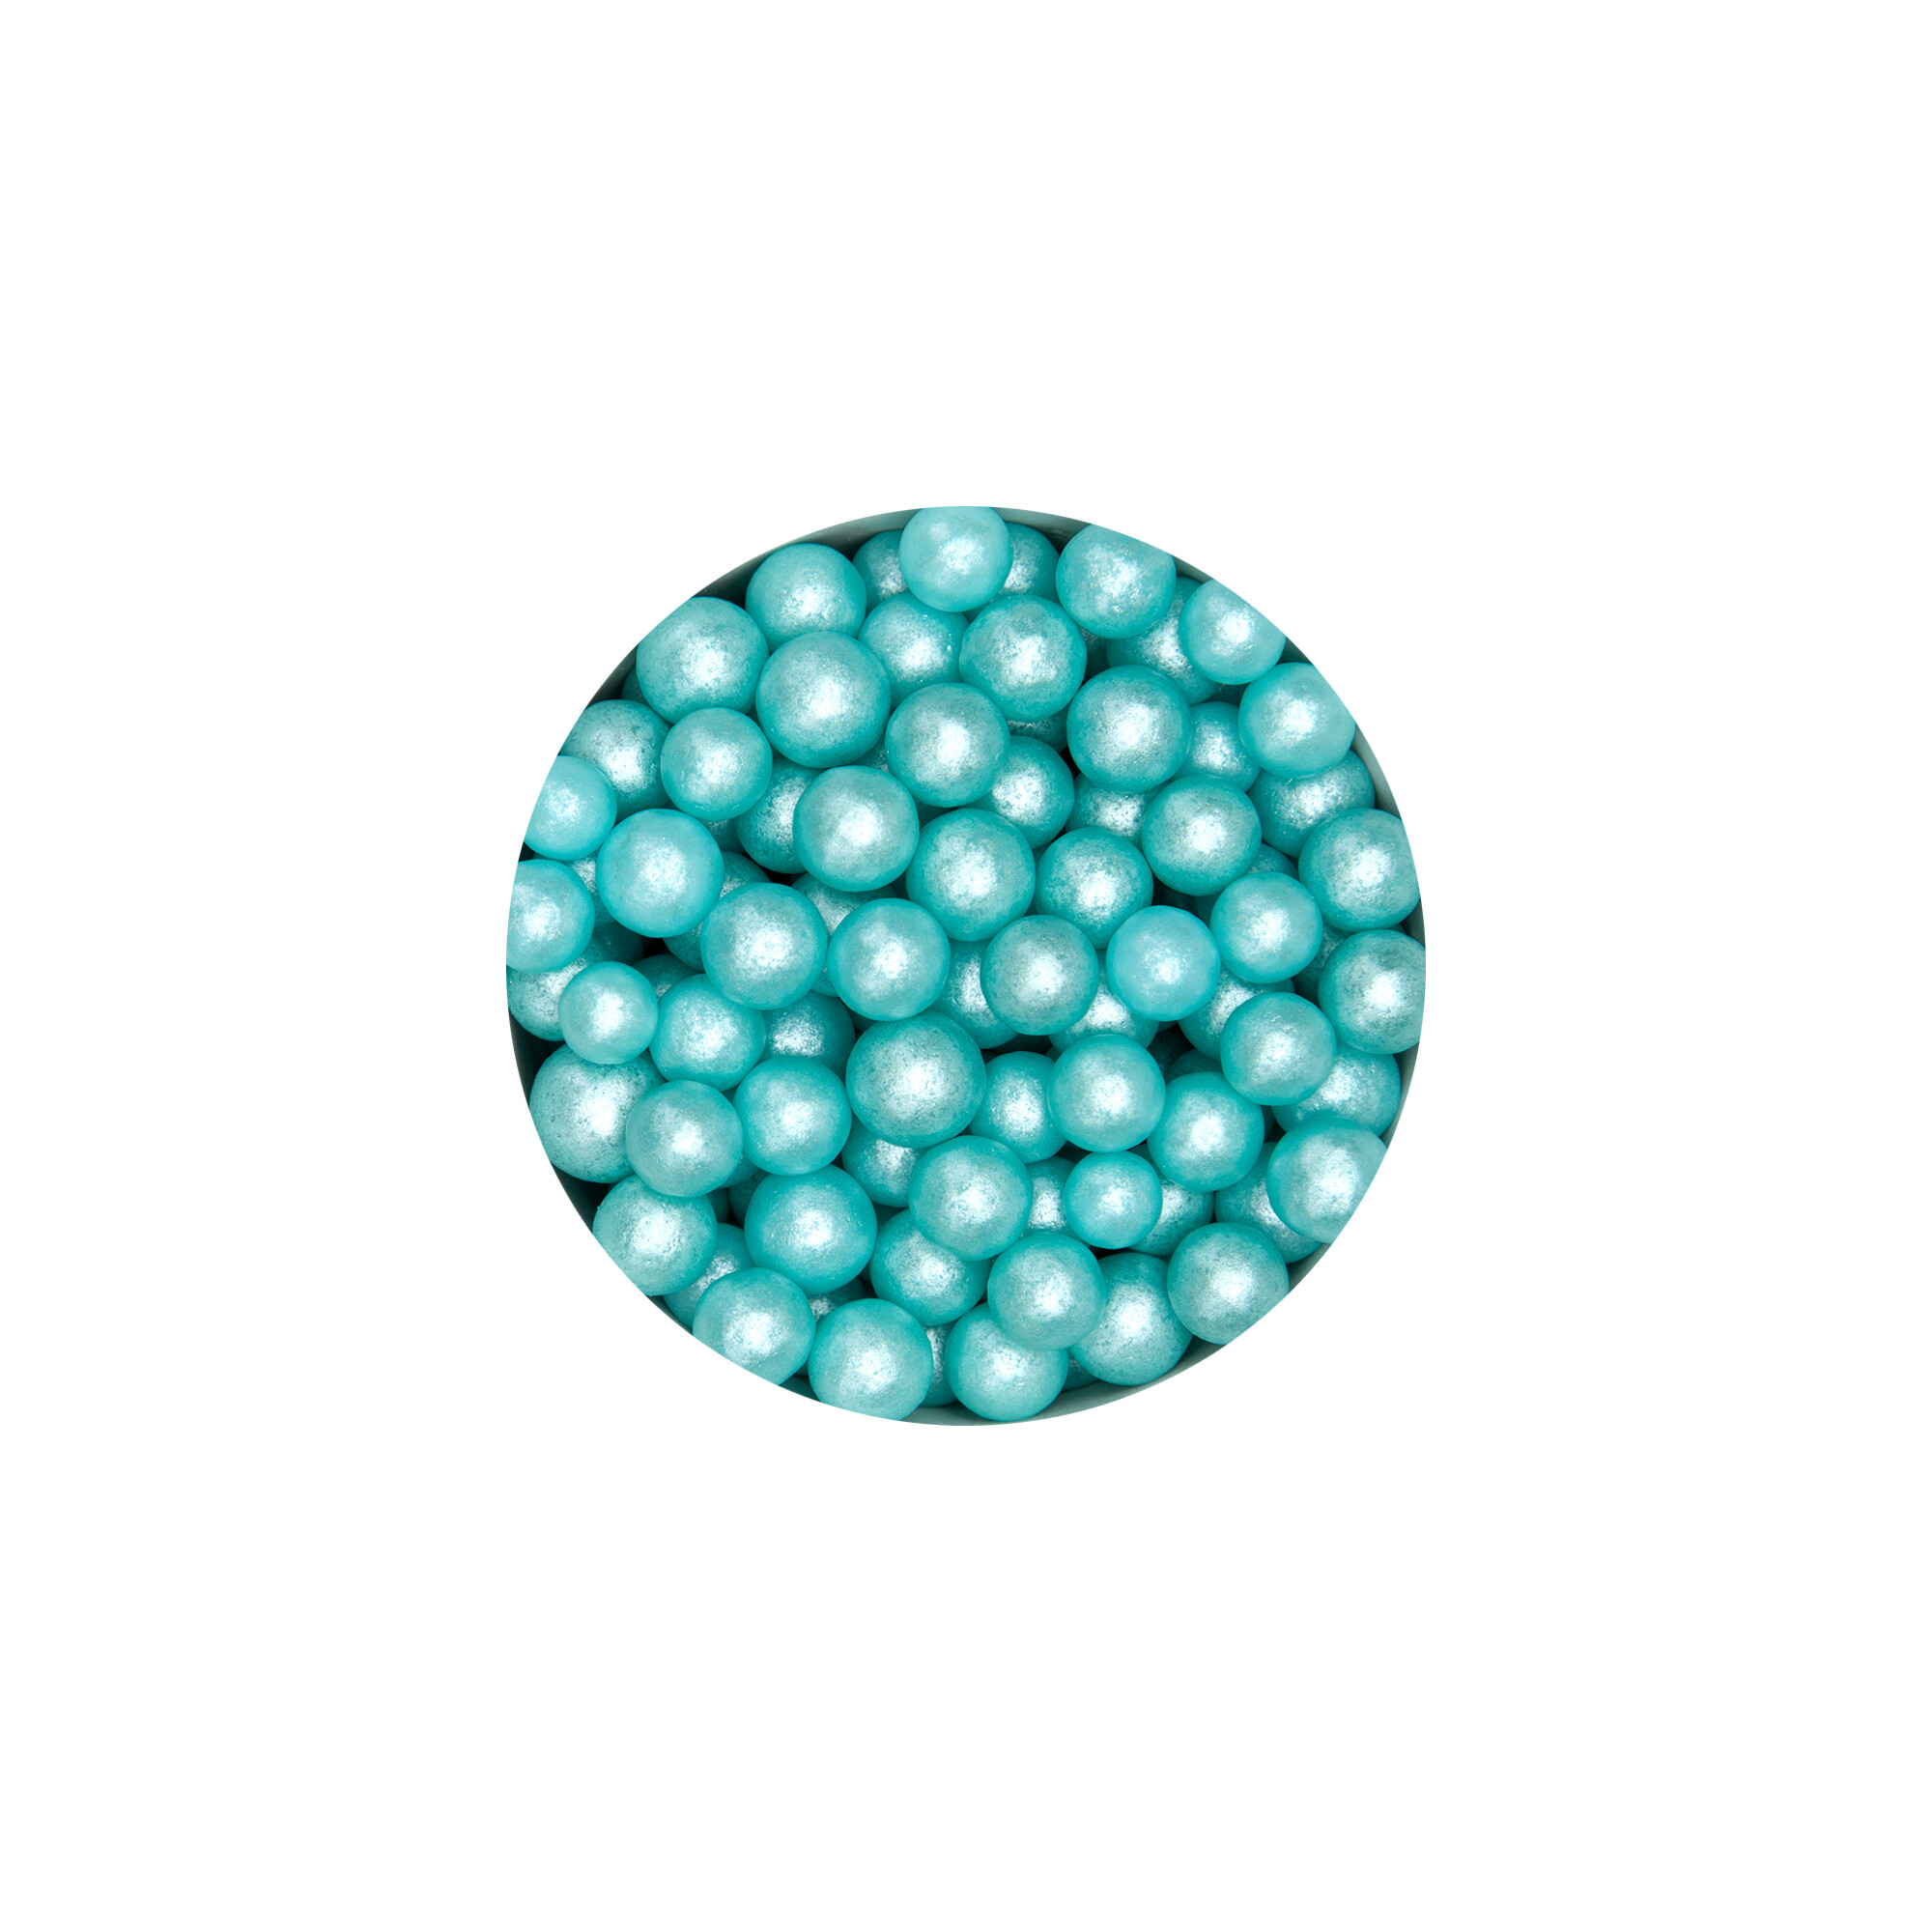 Essbarer Streudekor – Perlen Maxi